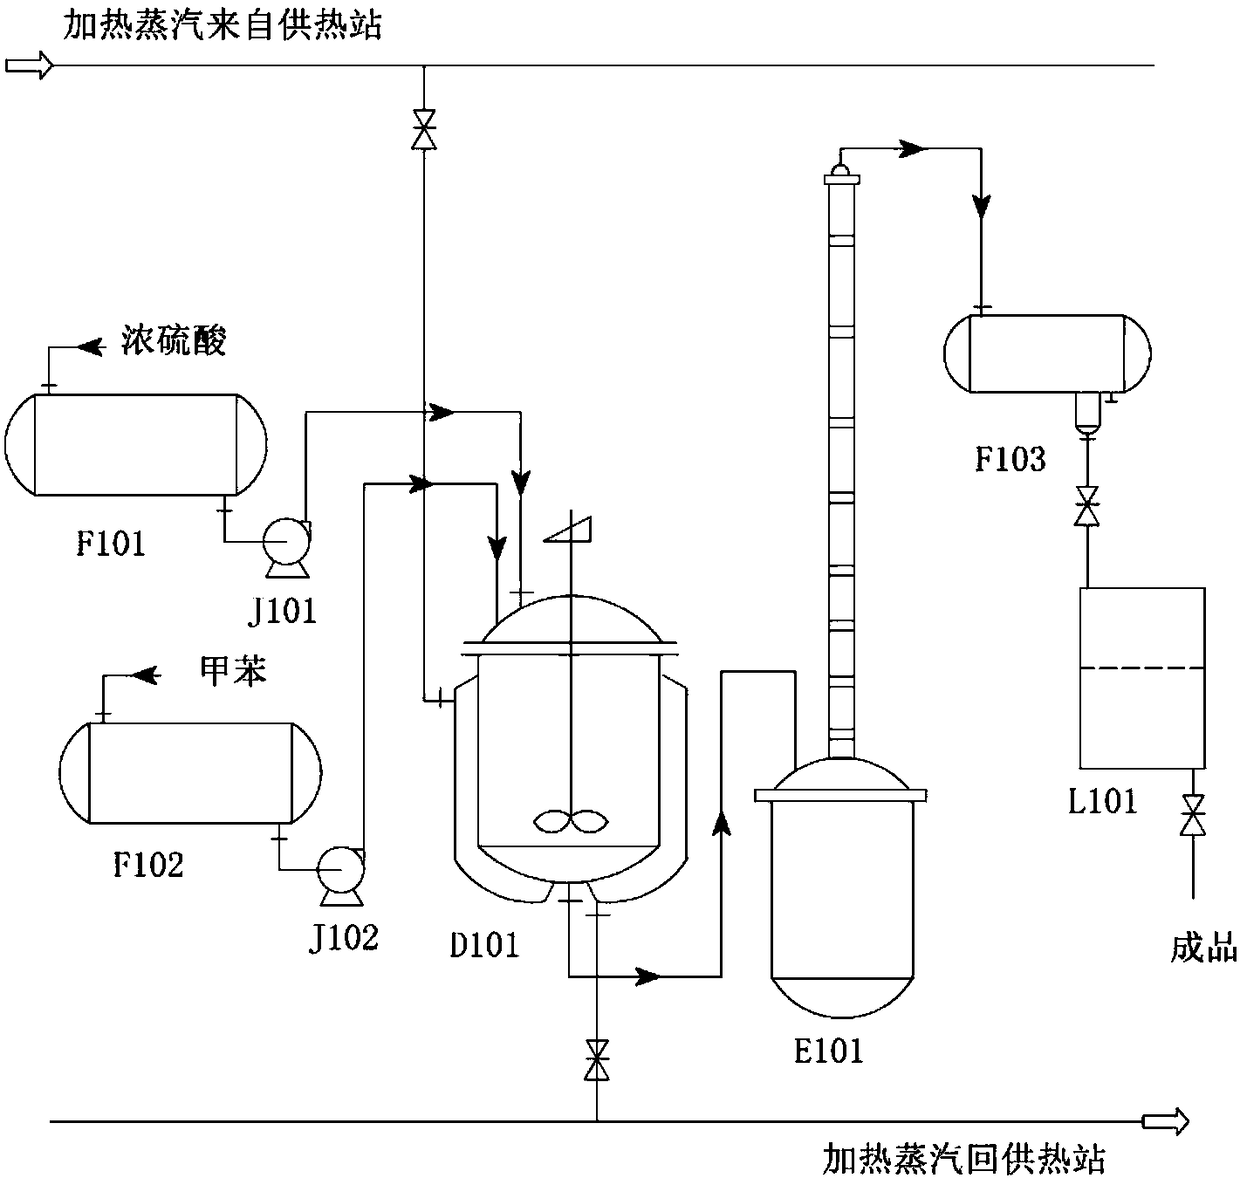 Production device of medicine intermediate high-purity toluene